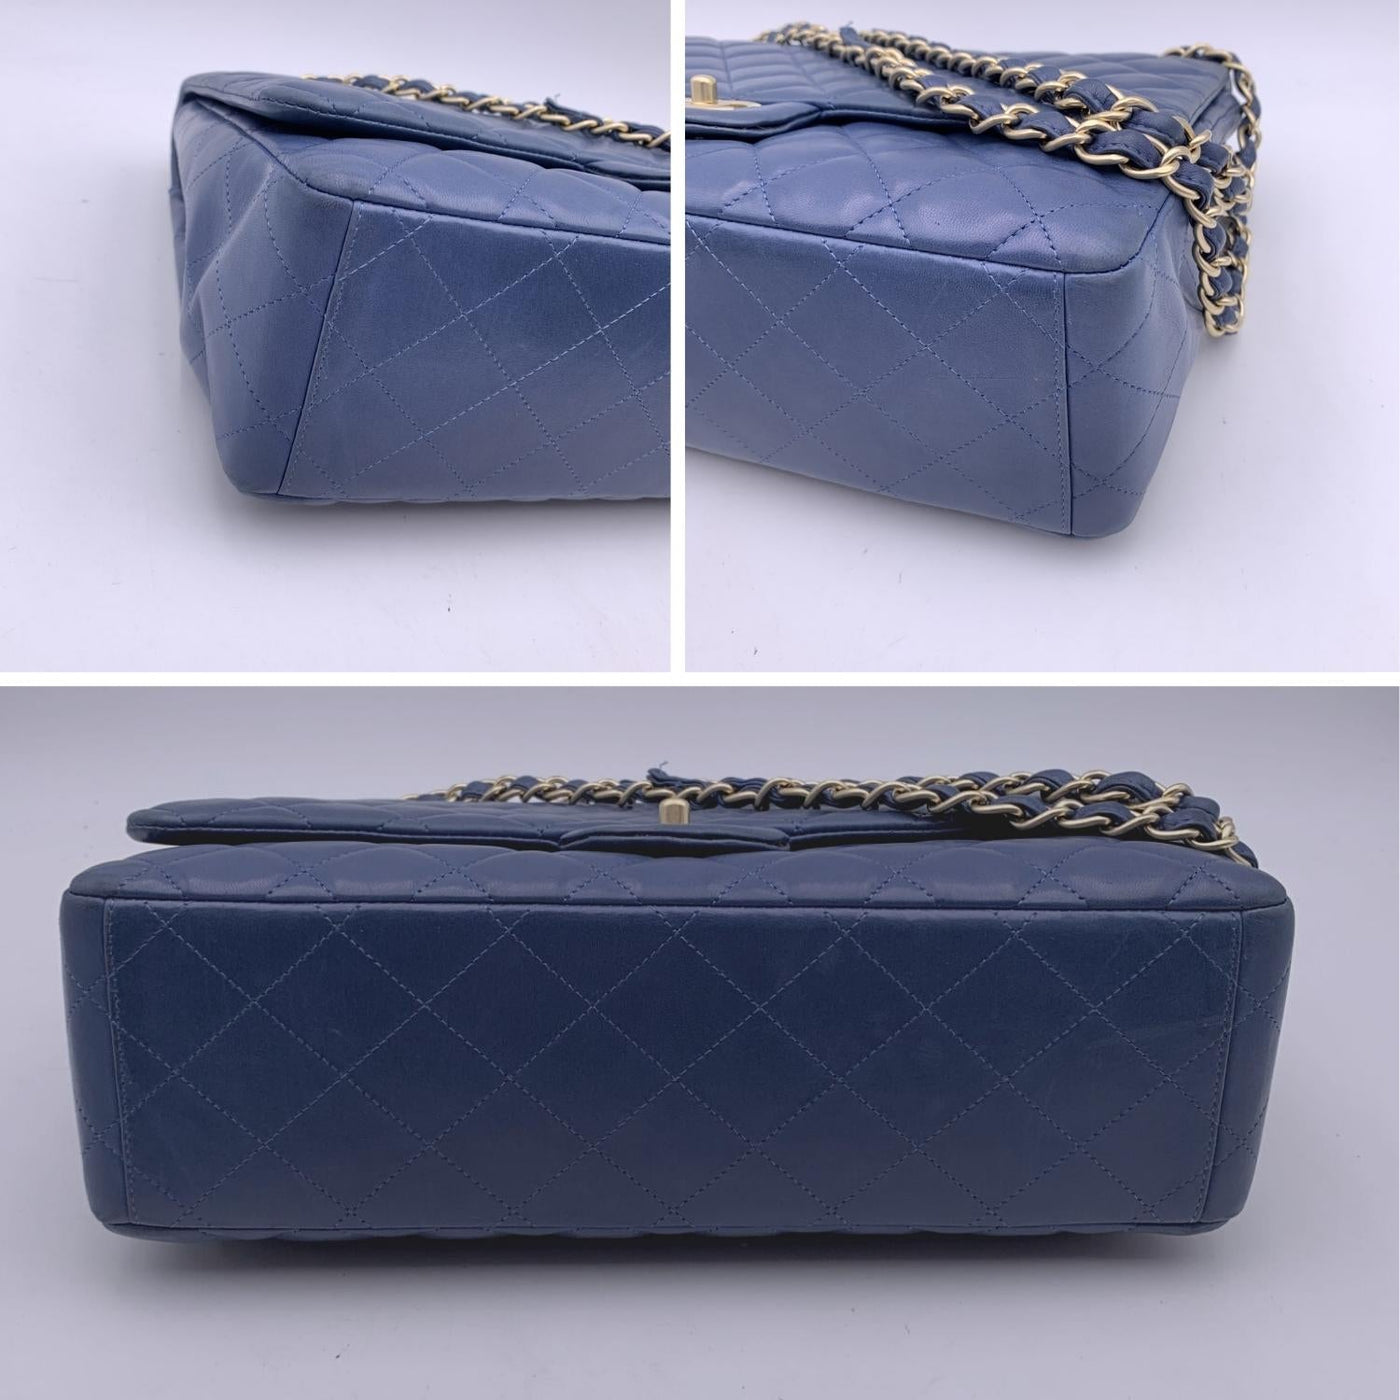 chanel classic flap bag blue